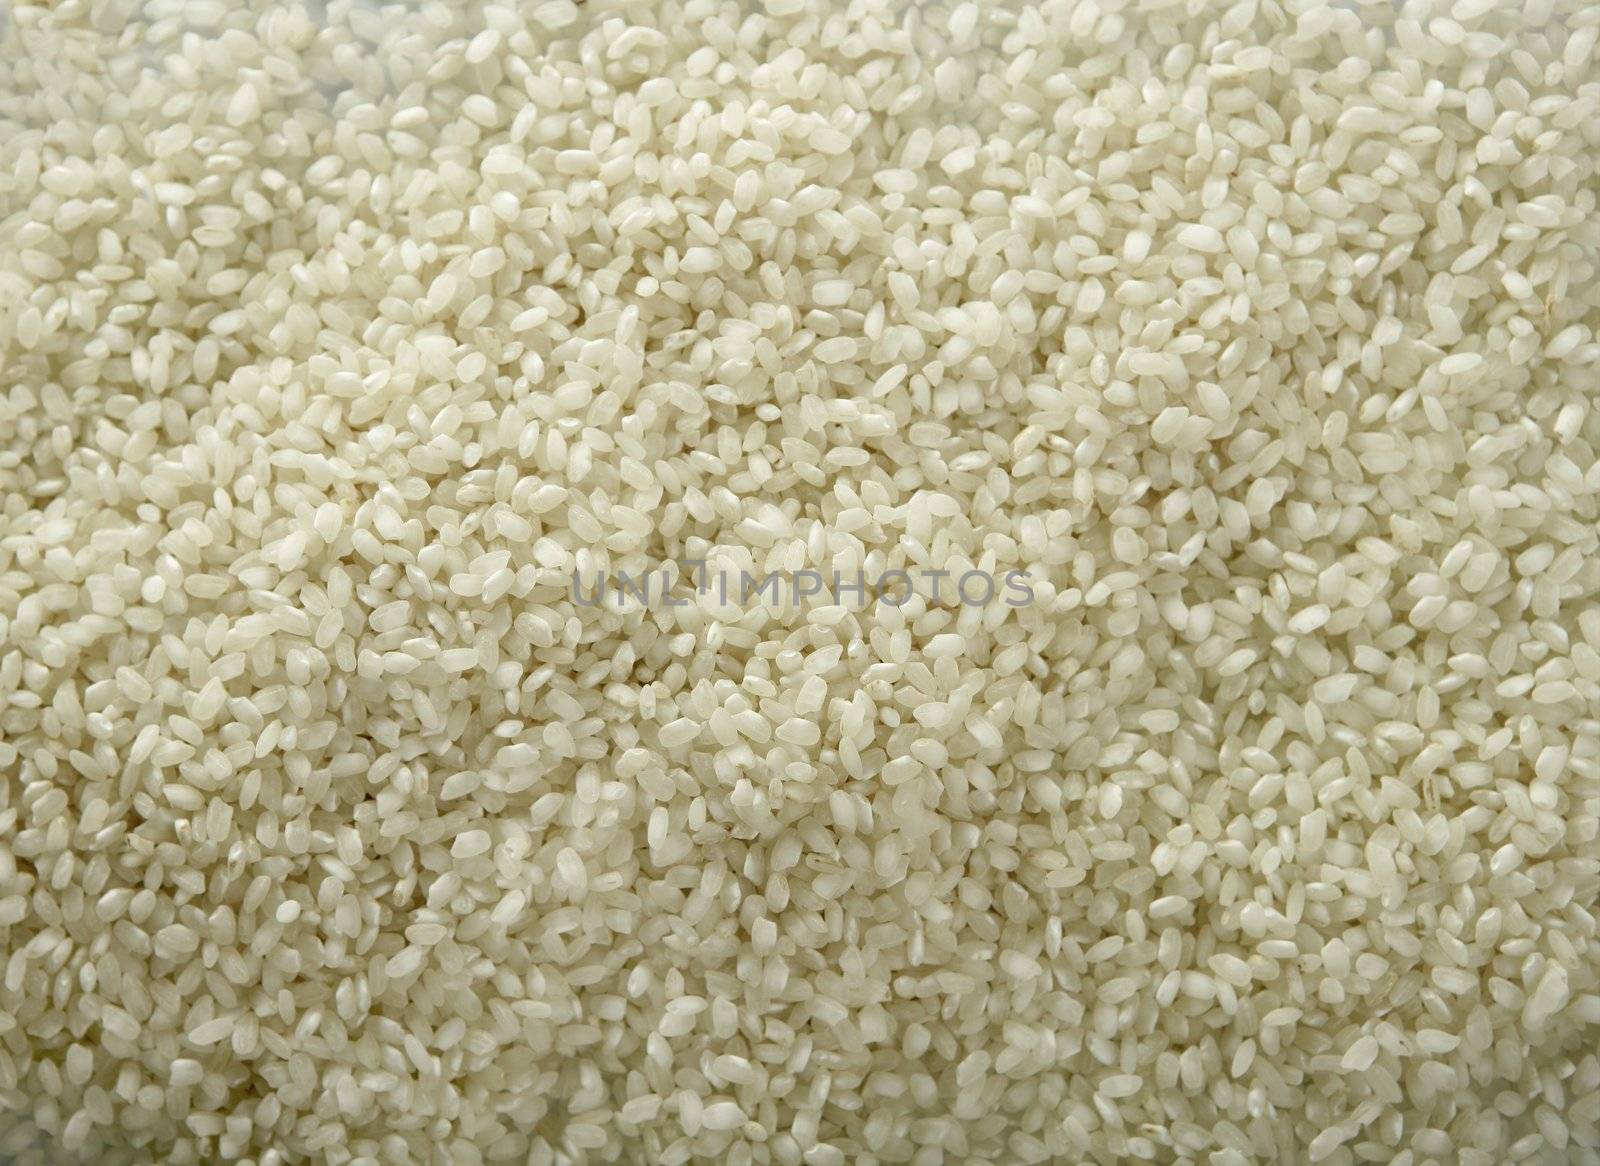 White rice close up texture. Background pattern by lunamarina